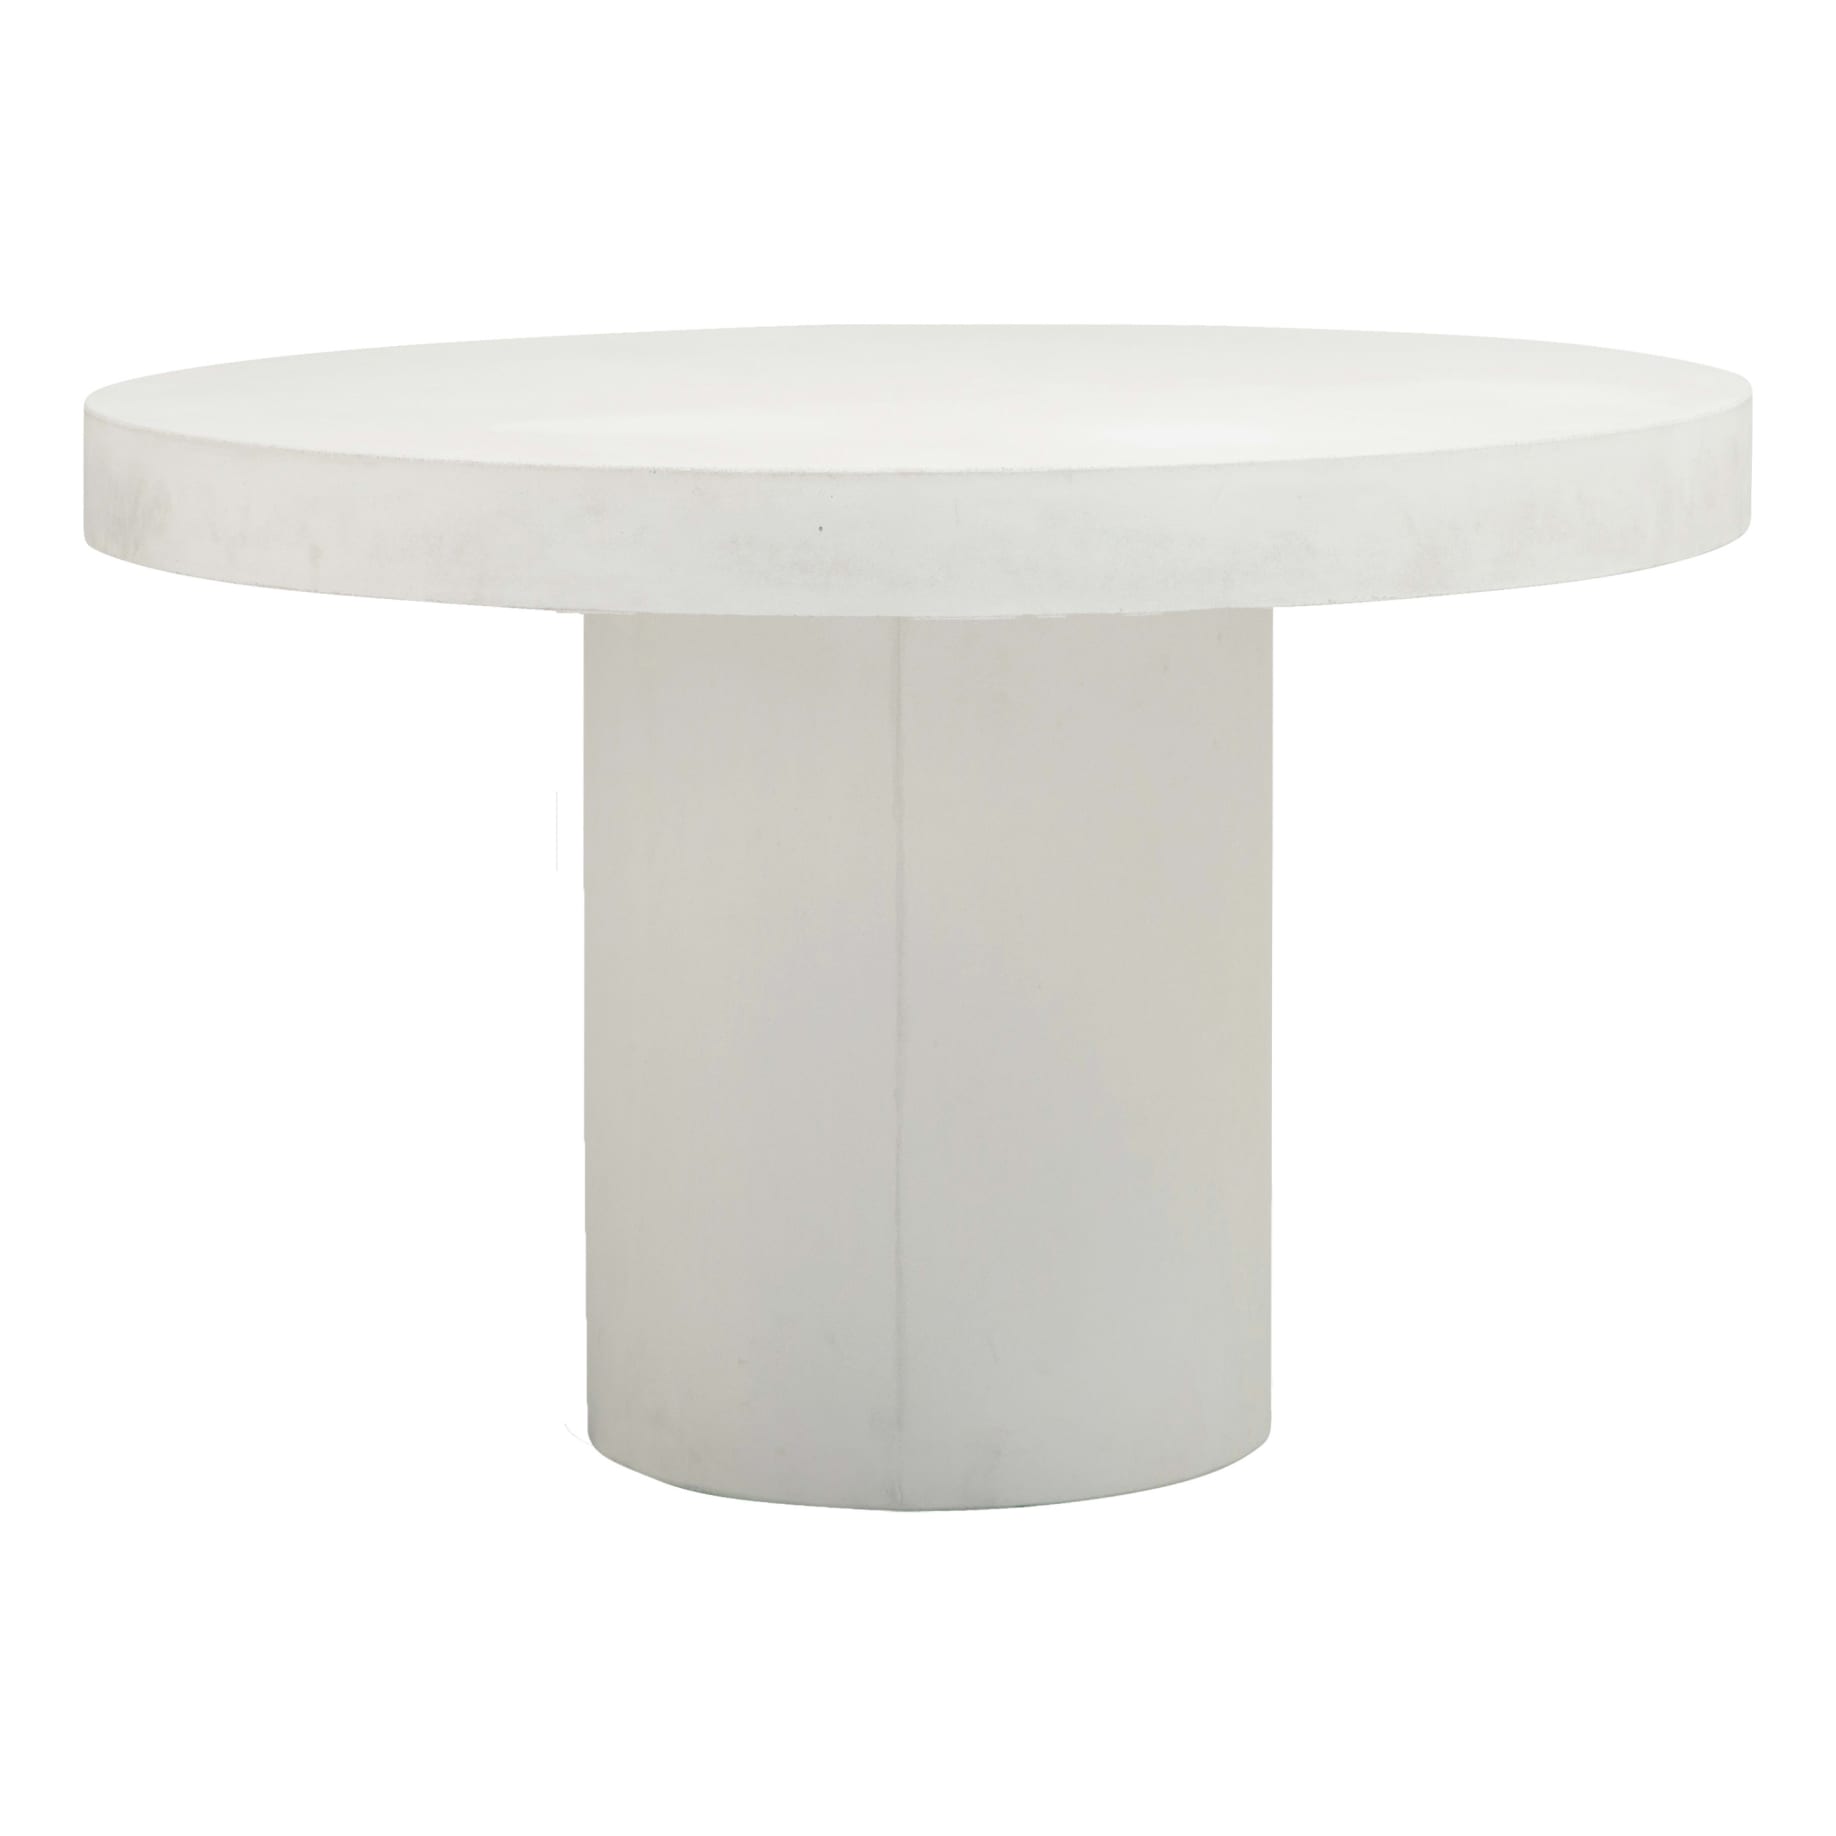 Flinders Round Dining Table 120cm in Concrete Bone